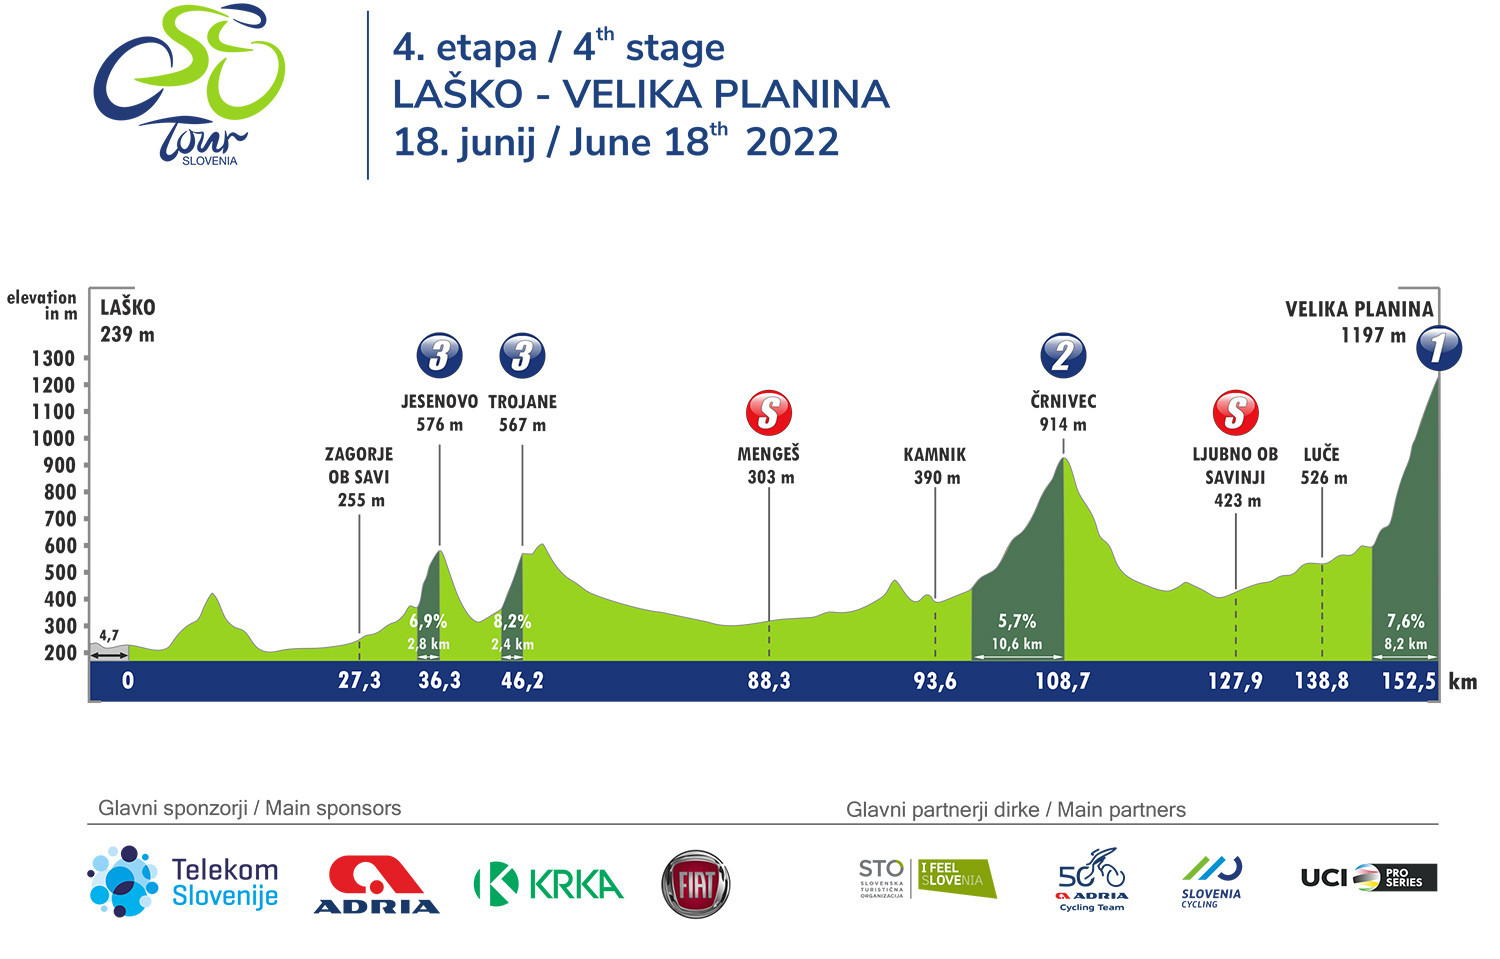 4th stage (Laško – Velika planina) through the eyes of experts